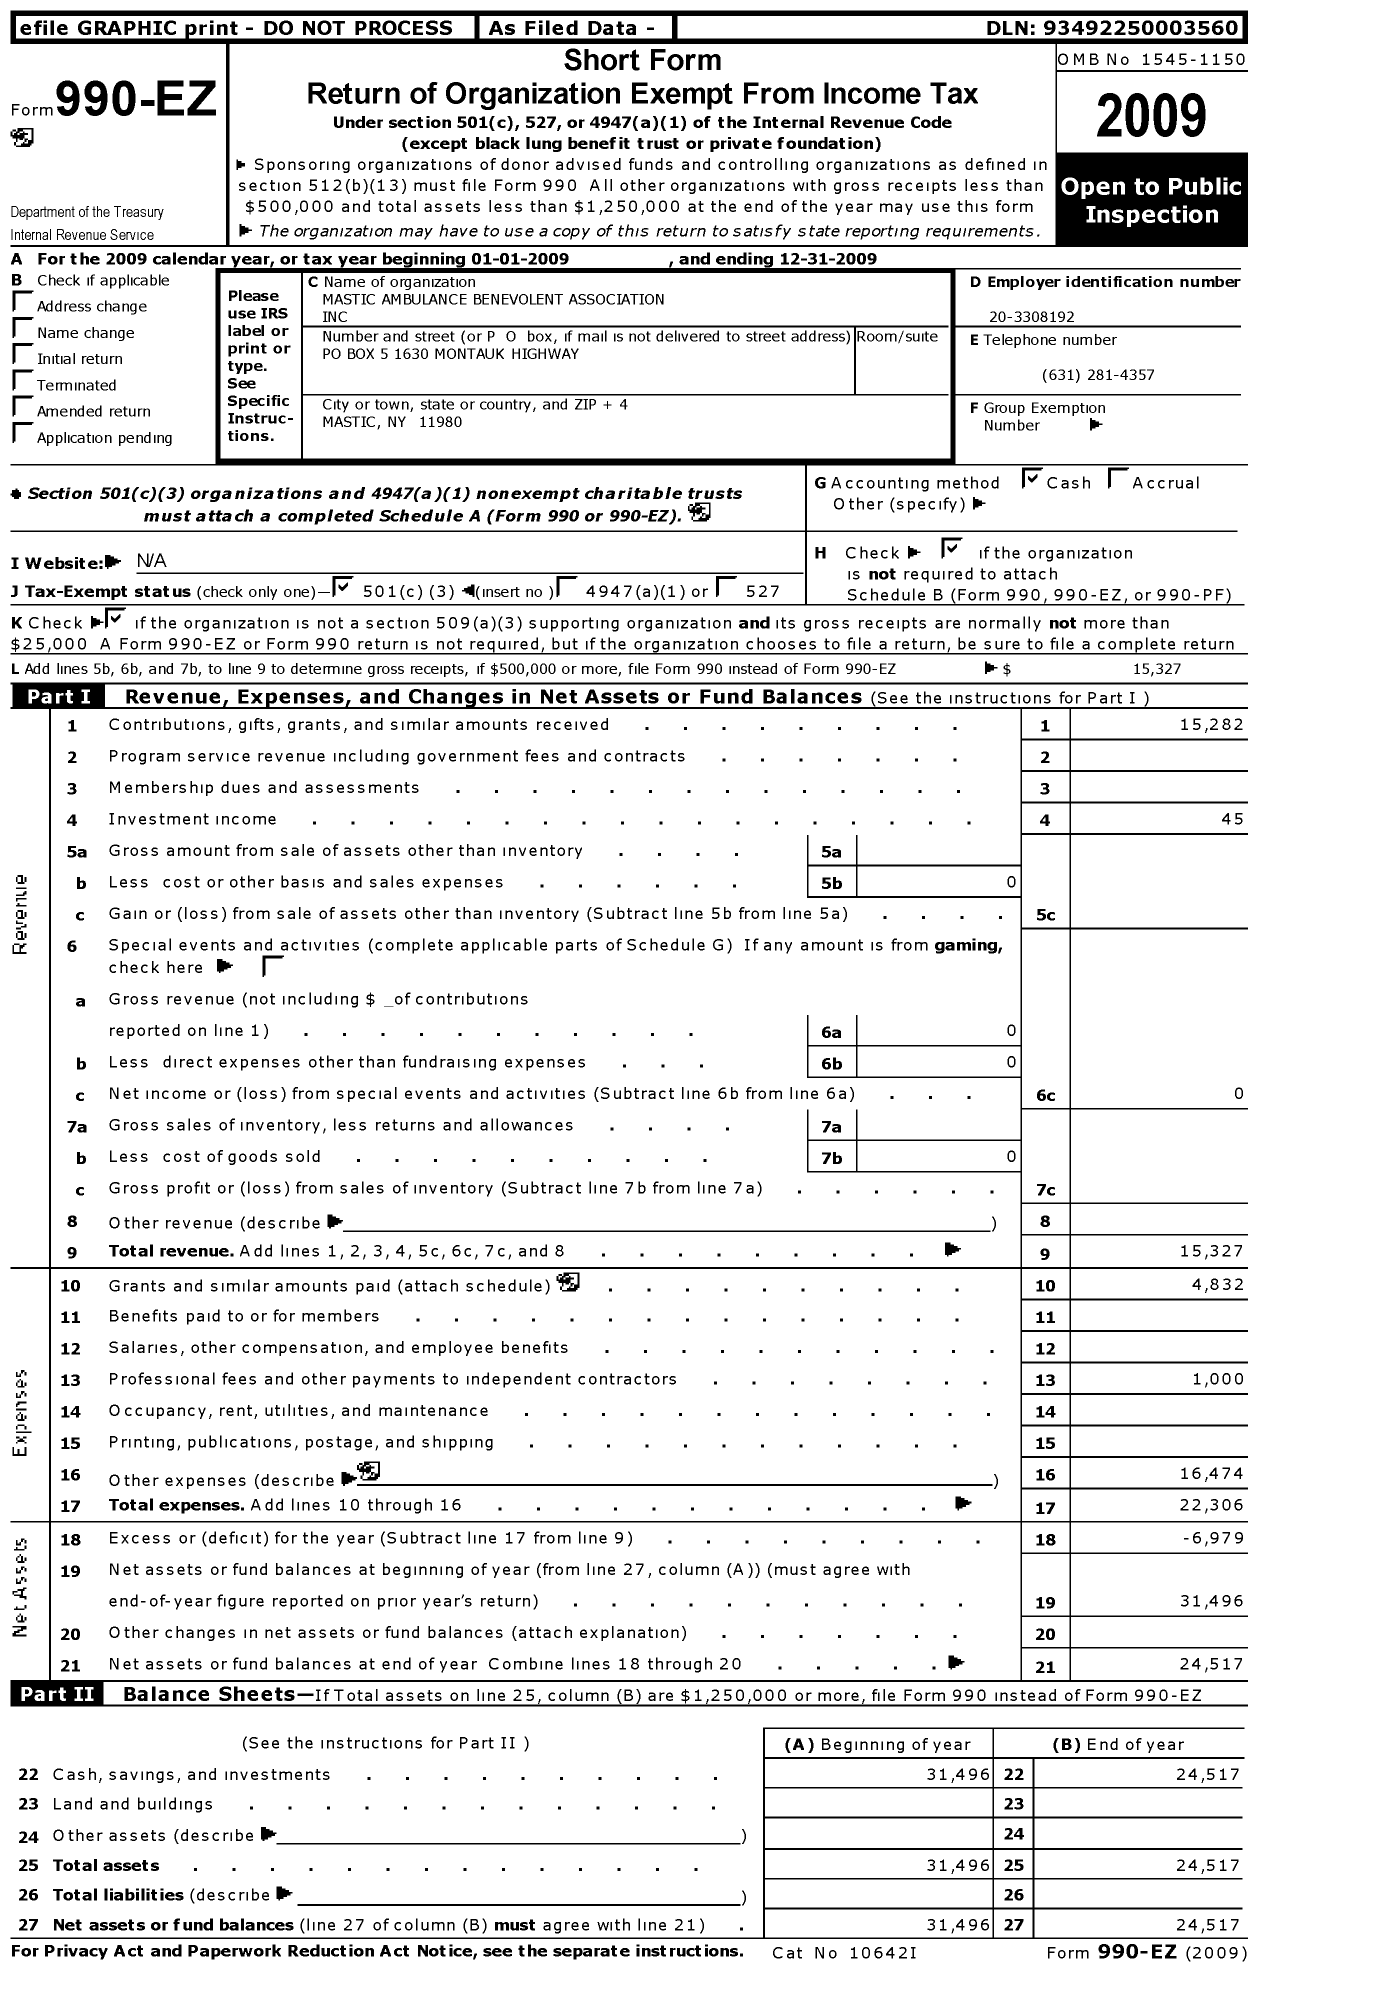 Image of first page of 2009 Form 990EZ for Mastic Ambulance Benevolent Association